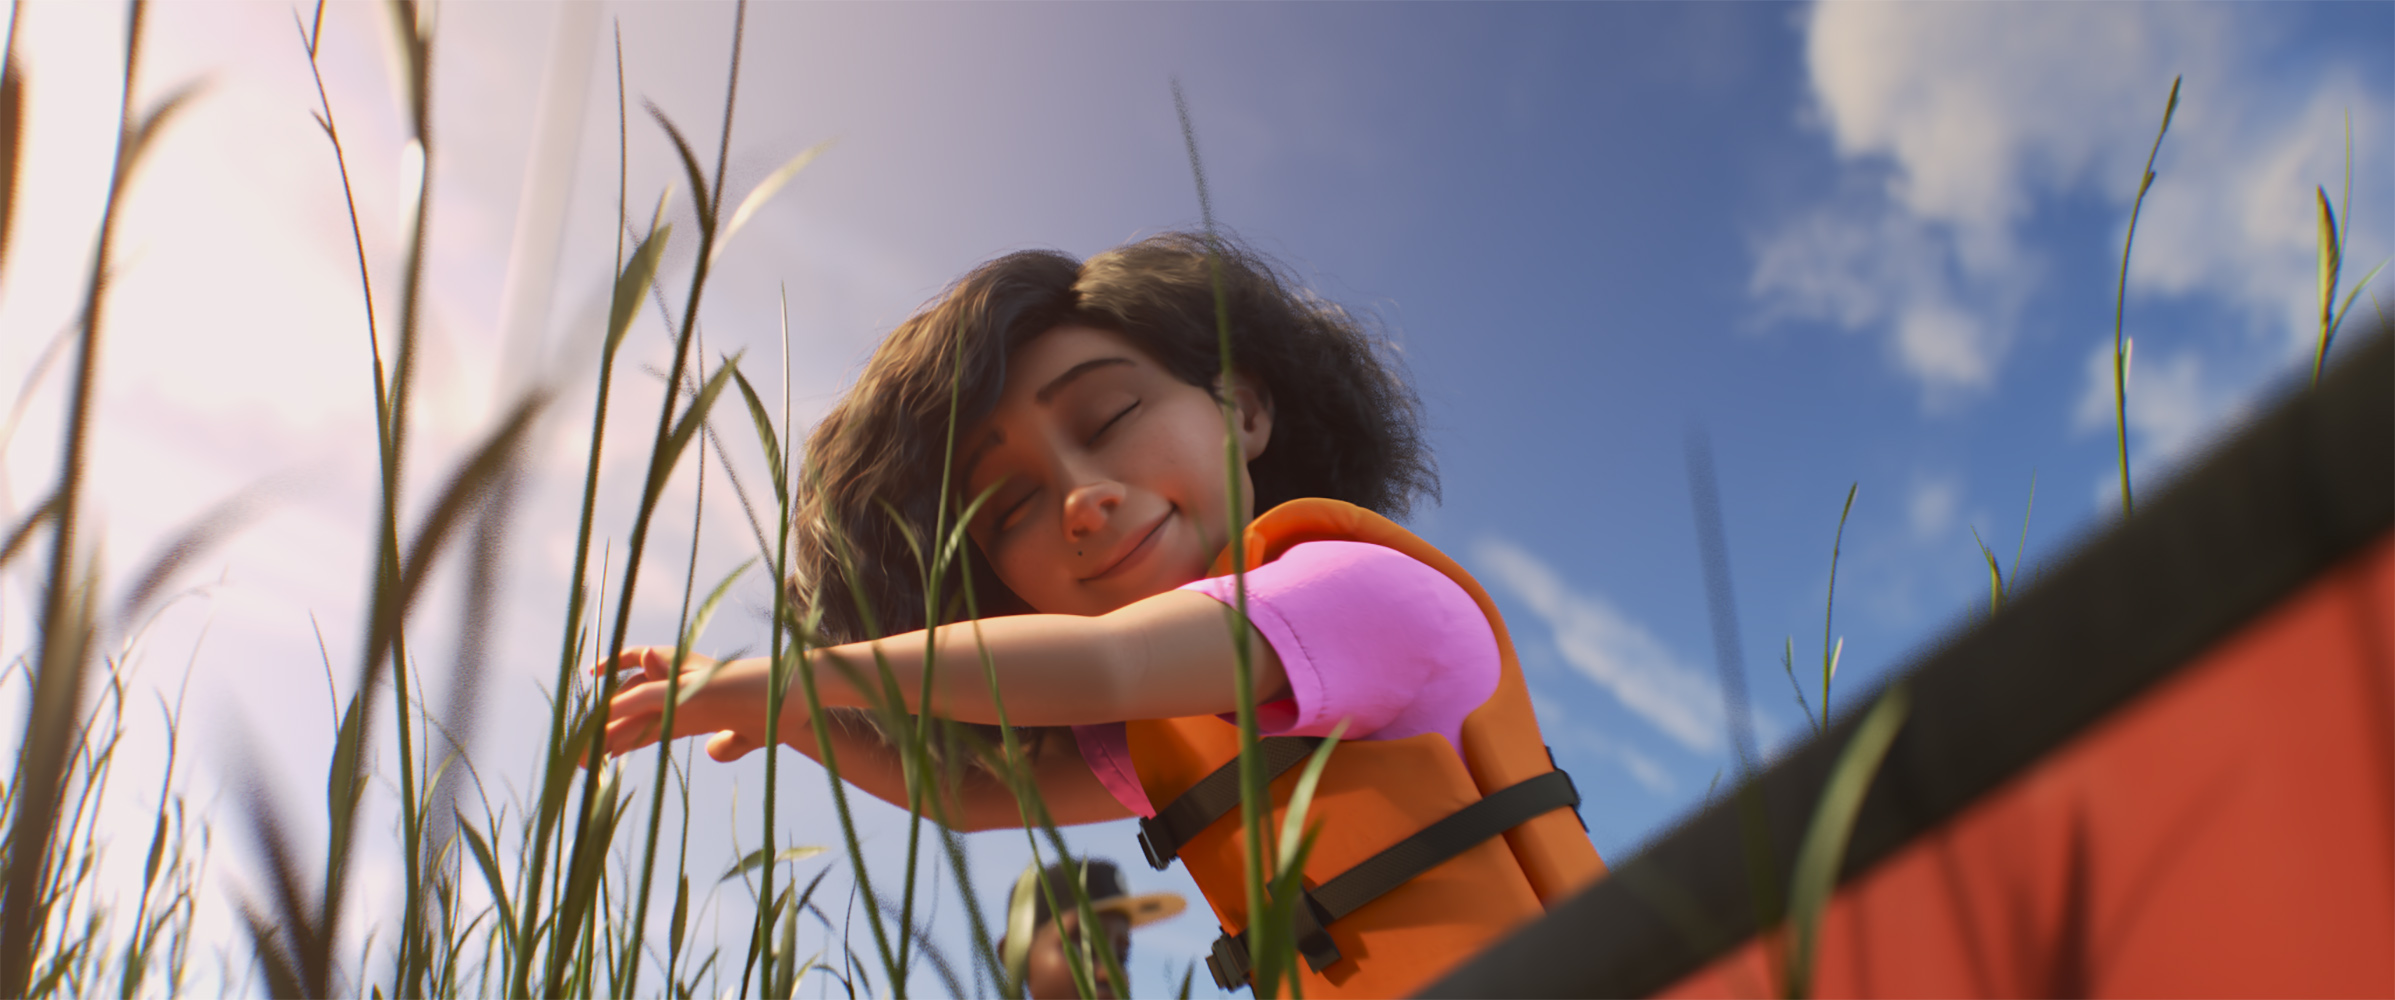 Image of Best In Show Loop short by Pixar Animation Studios